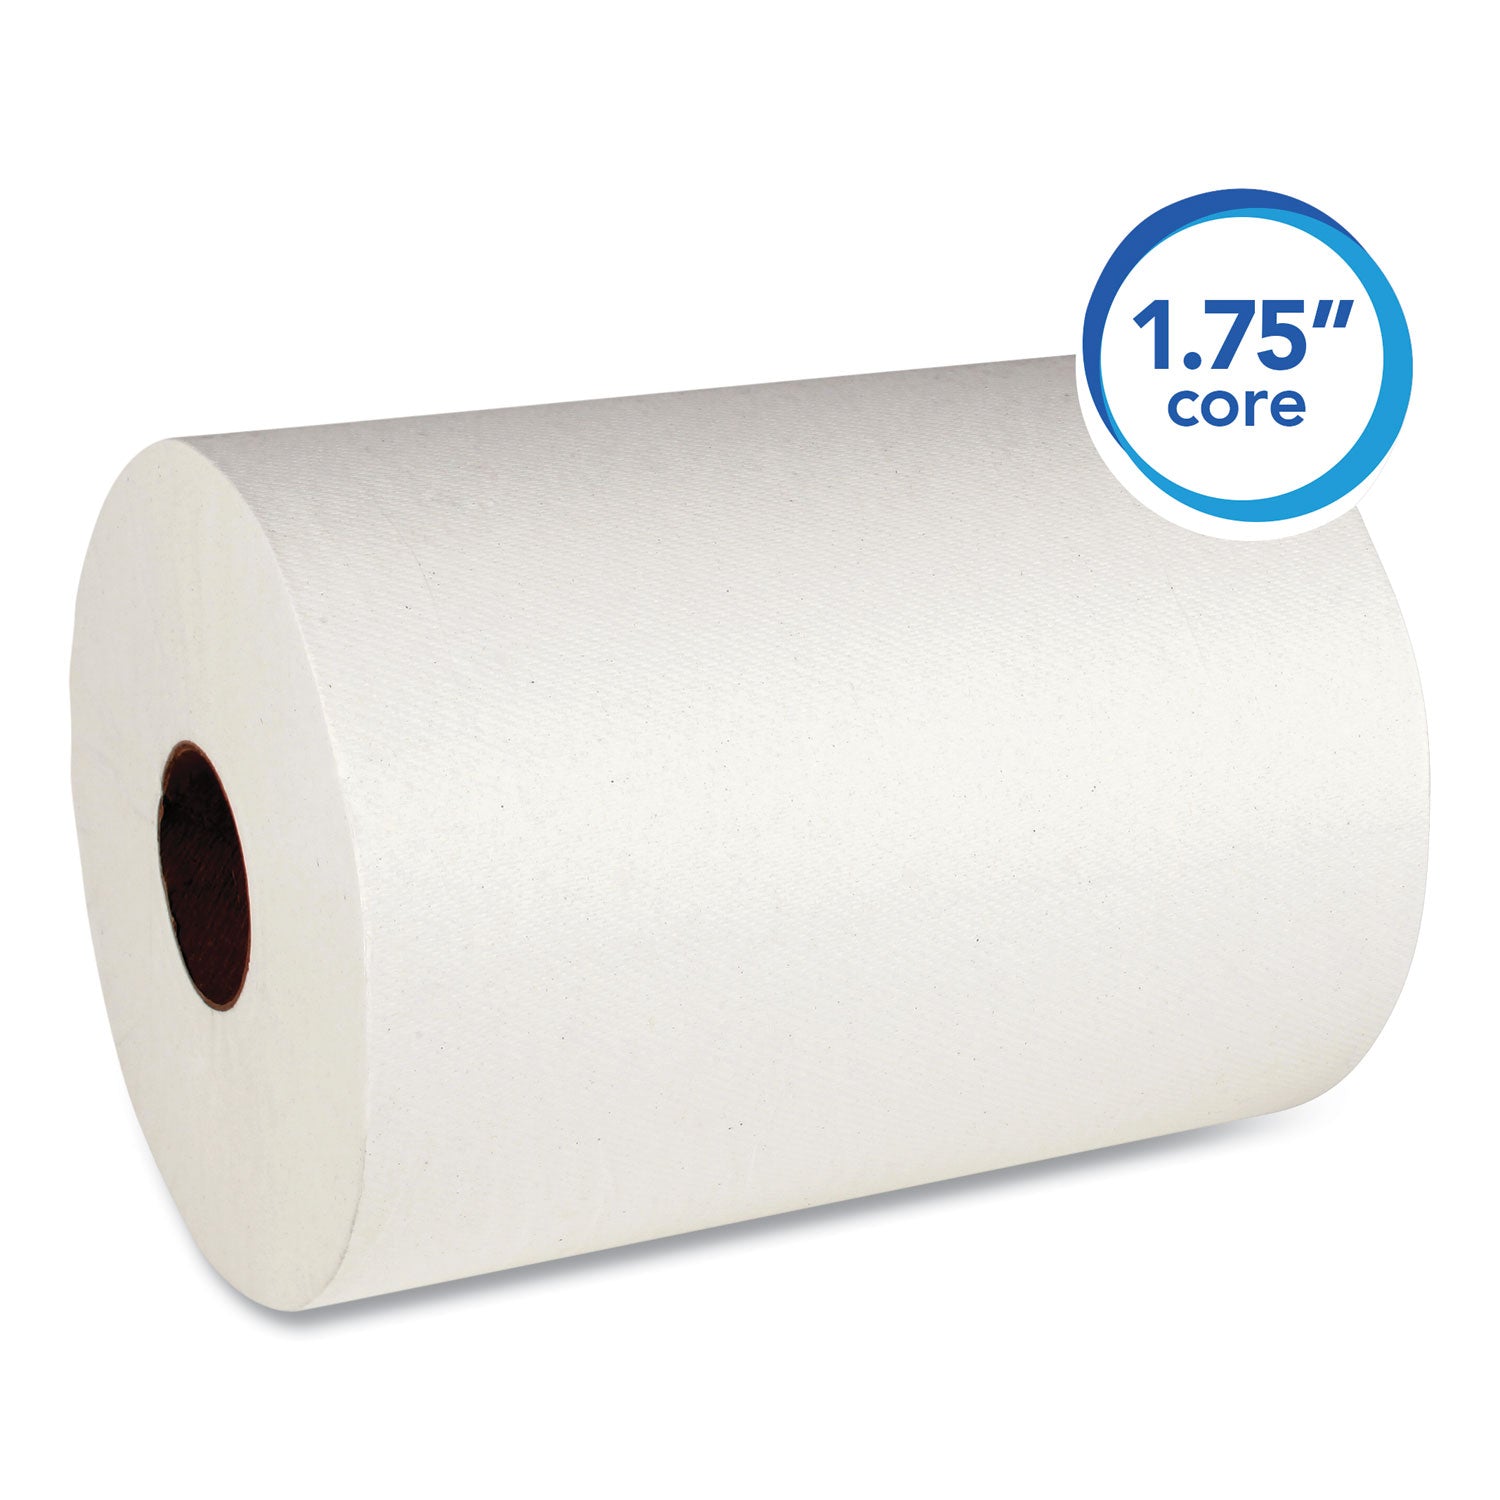 Slimroll Towels, Absorbency Pockets, 8" x 580 ft, White, 6 Rolls/Carton - 